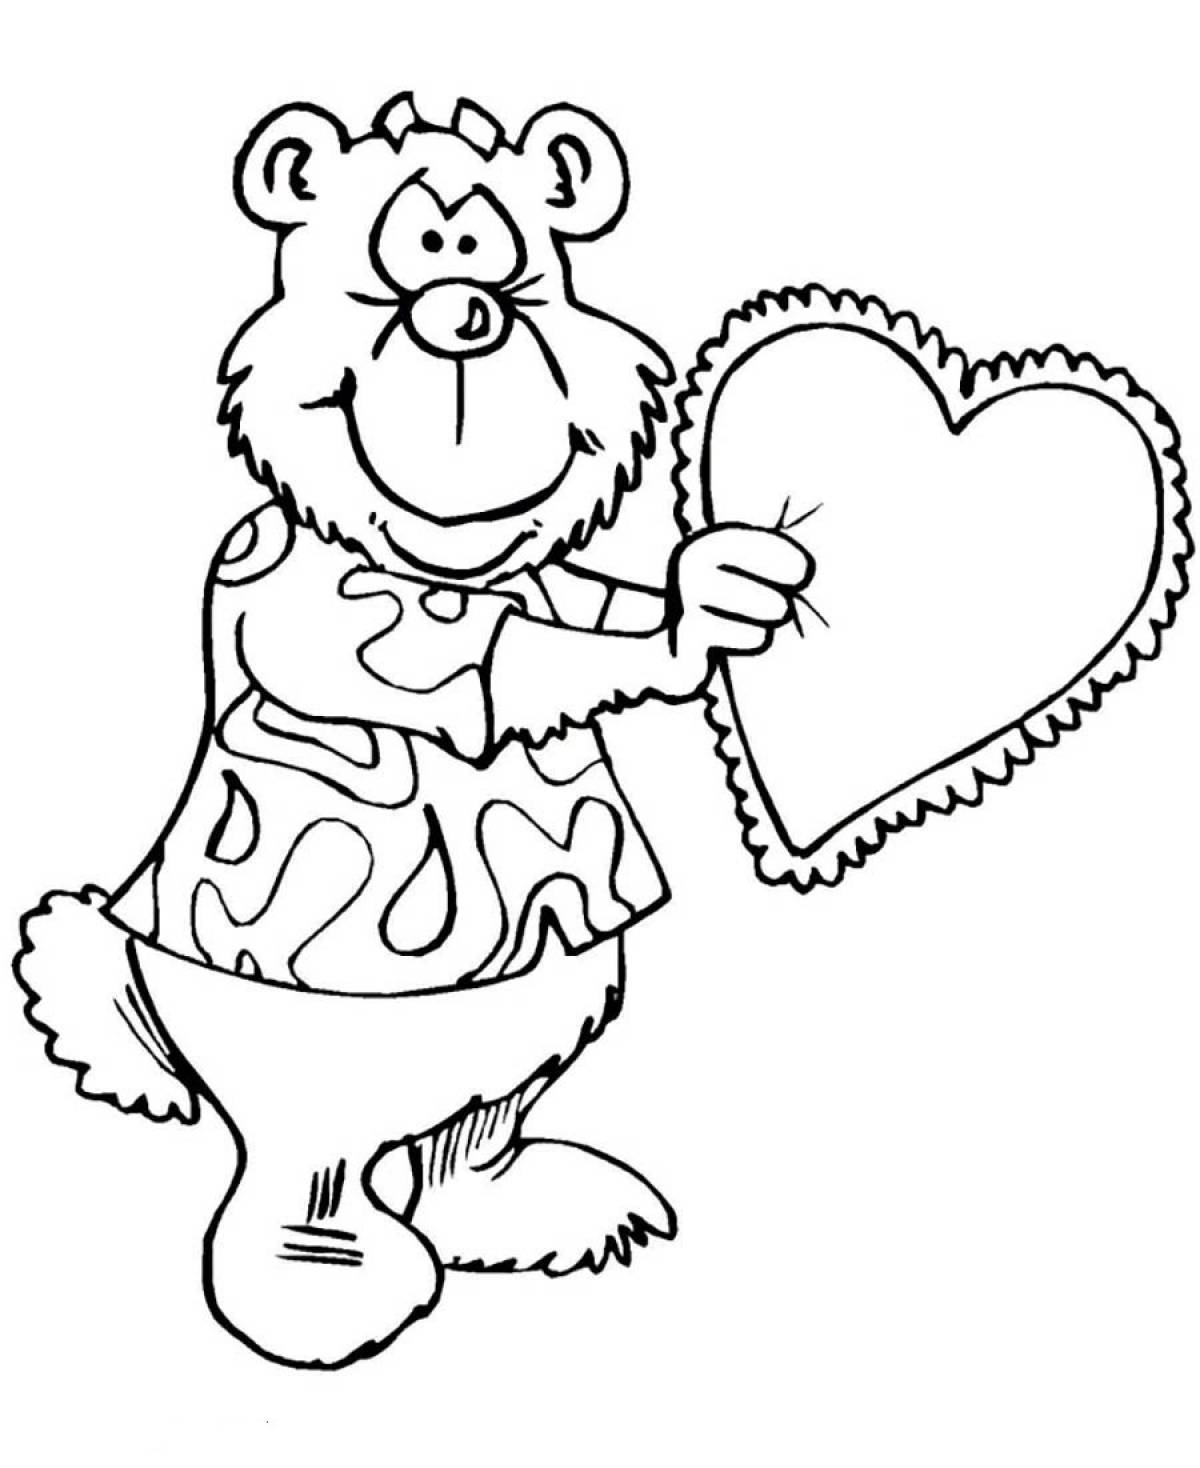 Happy valentine's day bear